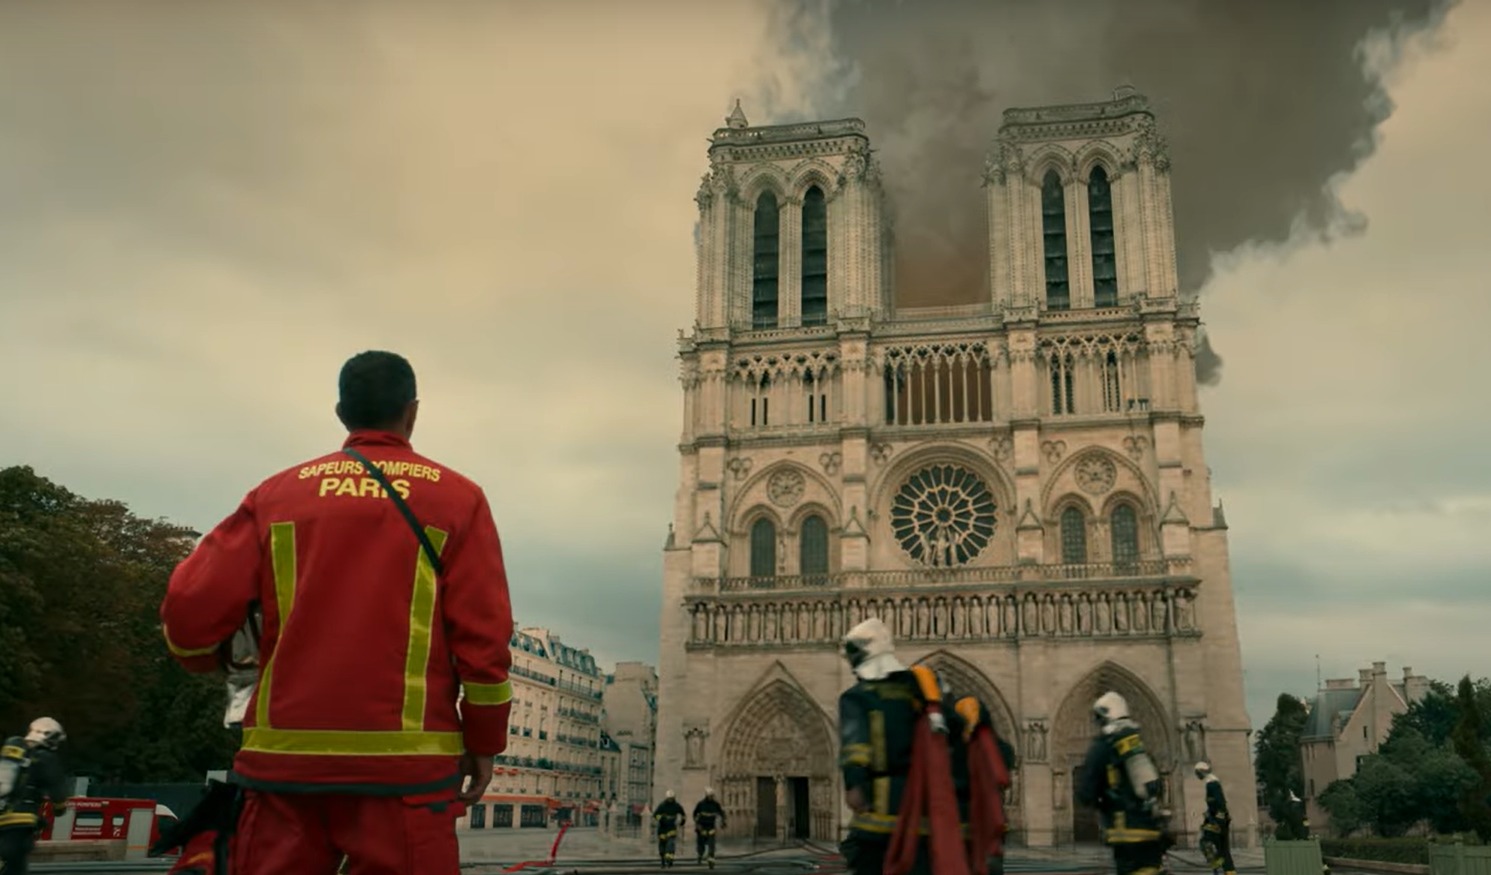 О пожаре в соборе Парижской Богоматери сняли мини-сериал